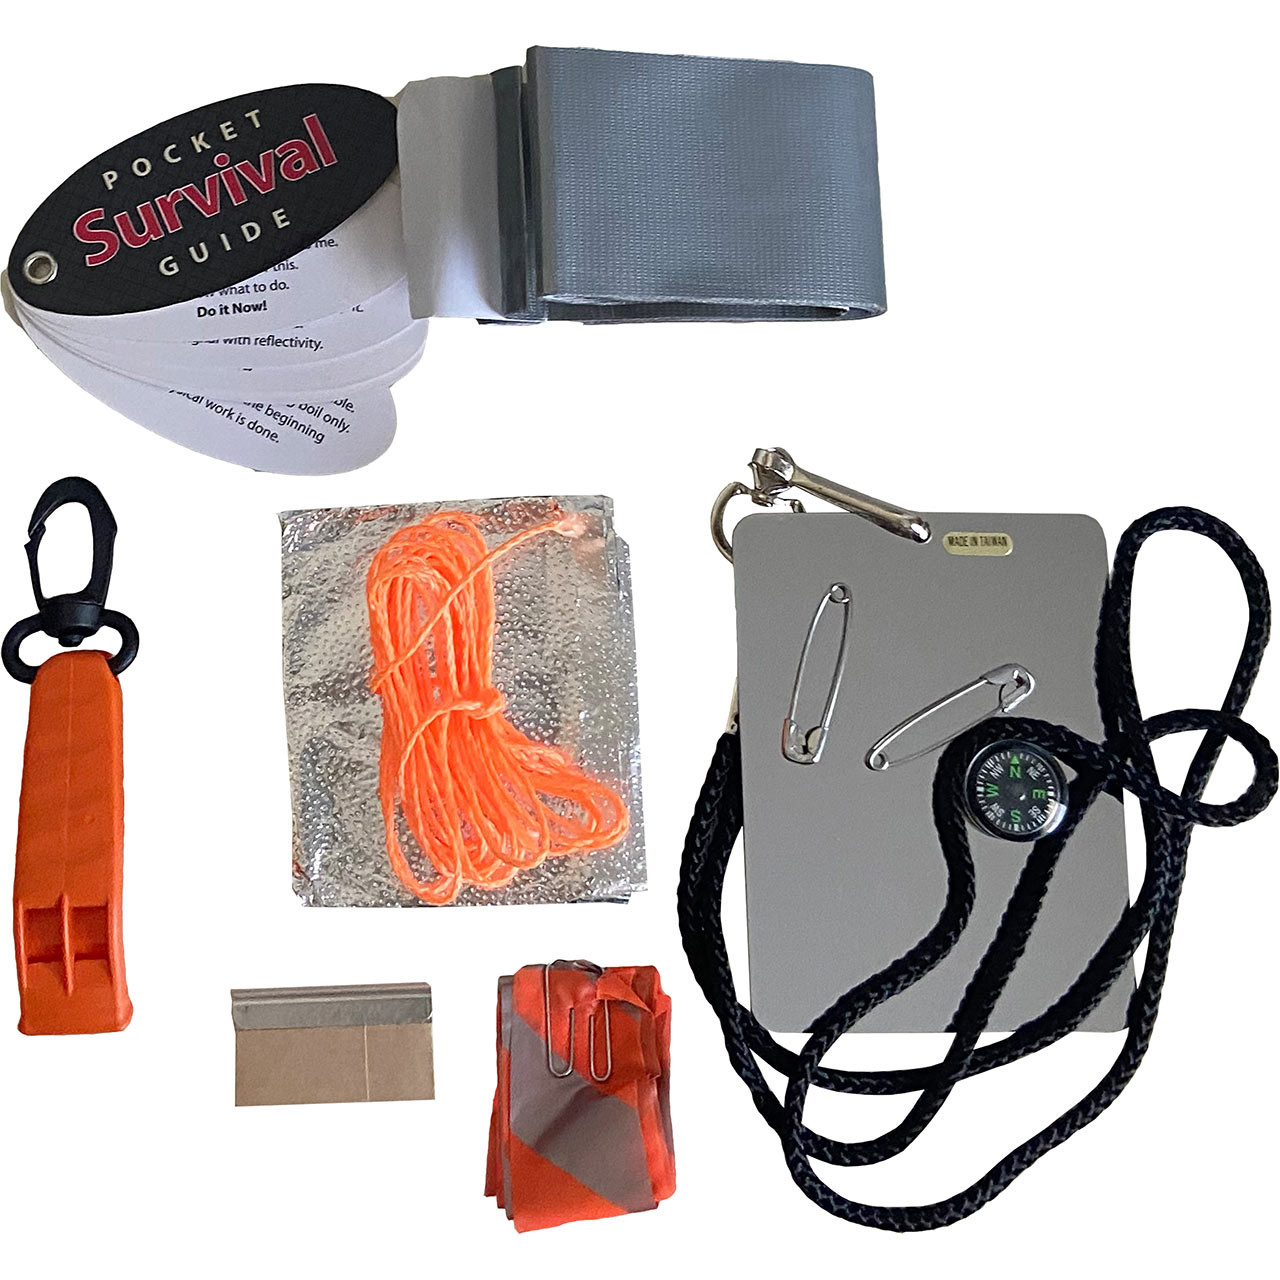 Pocket Survival Kit